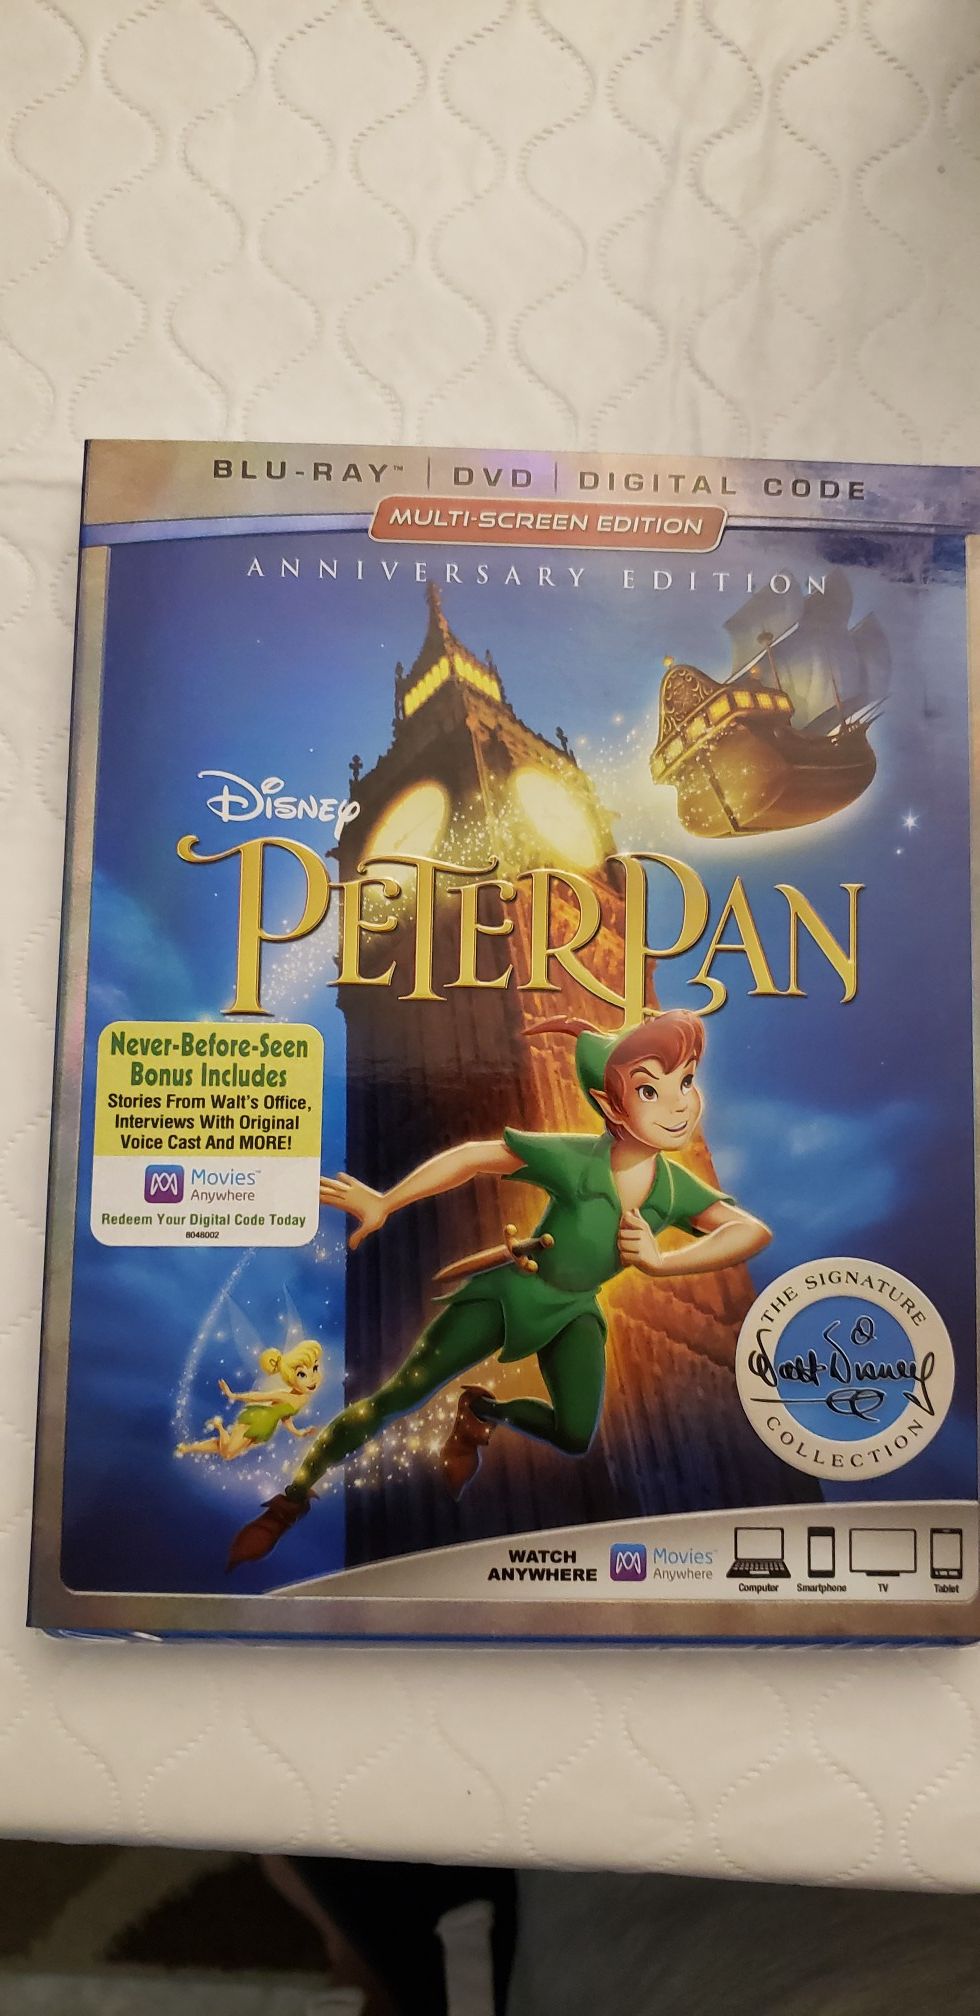 Disney Anniversary Edition of Peter Pan